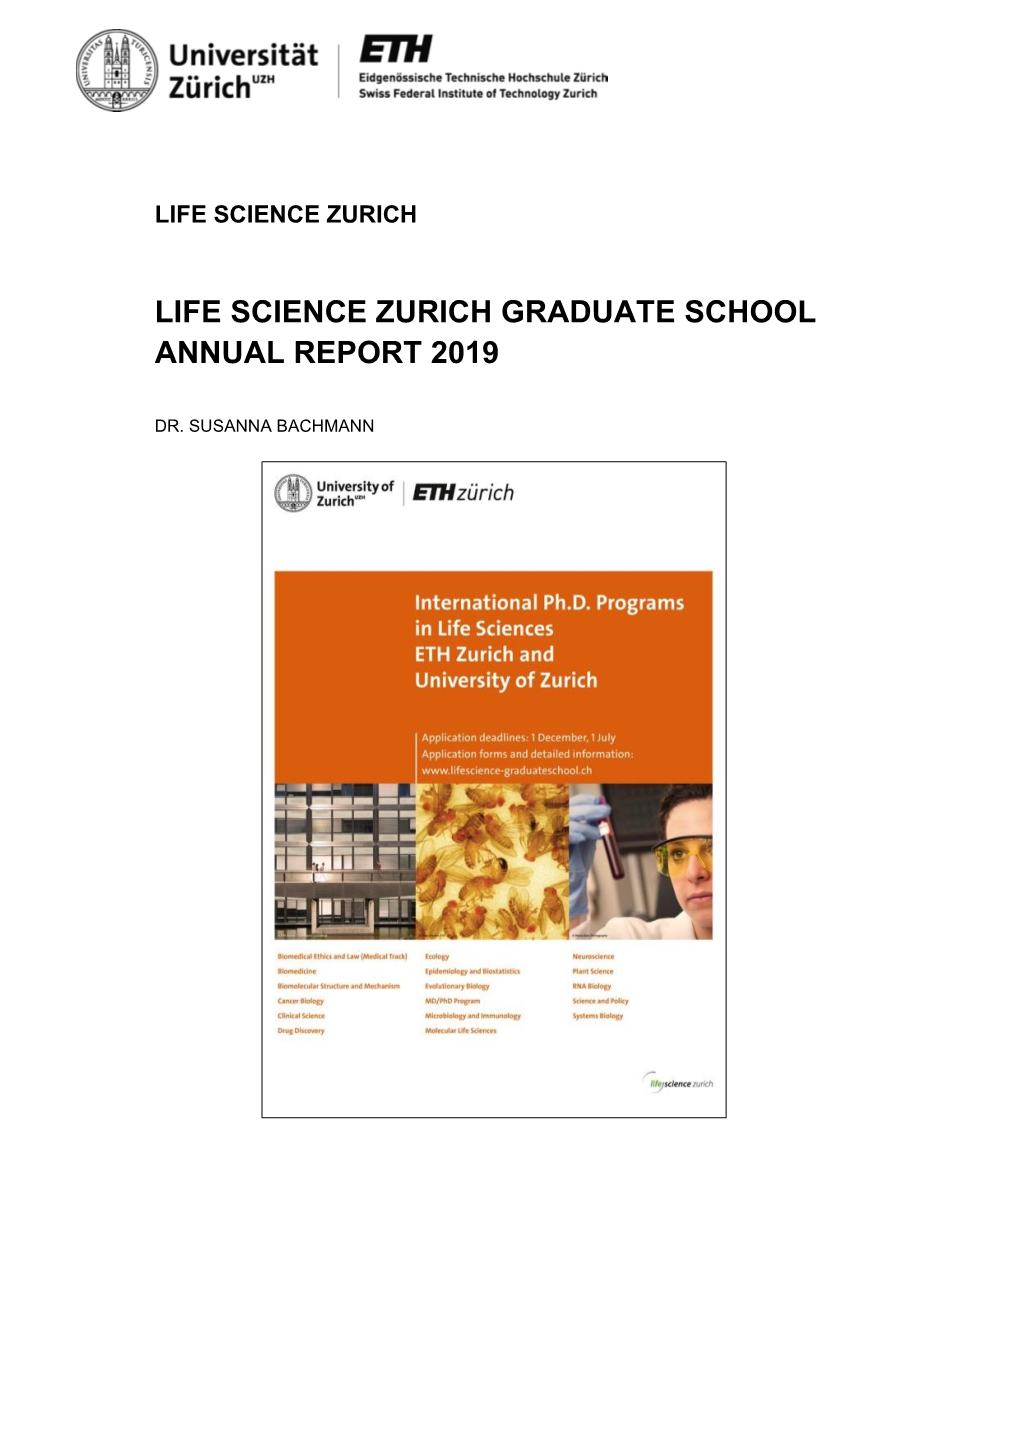 Life Science Zurich Graduate School Annual Report 2019